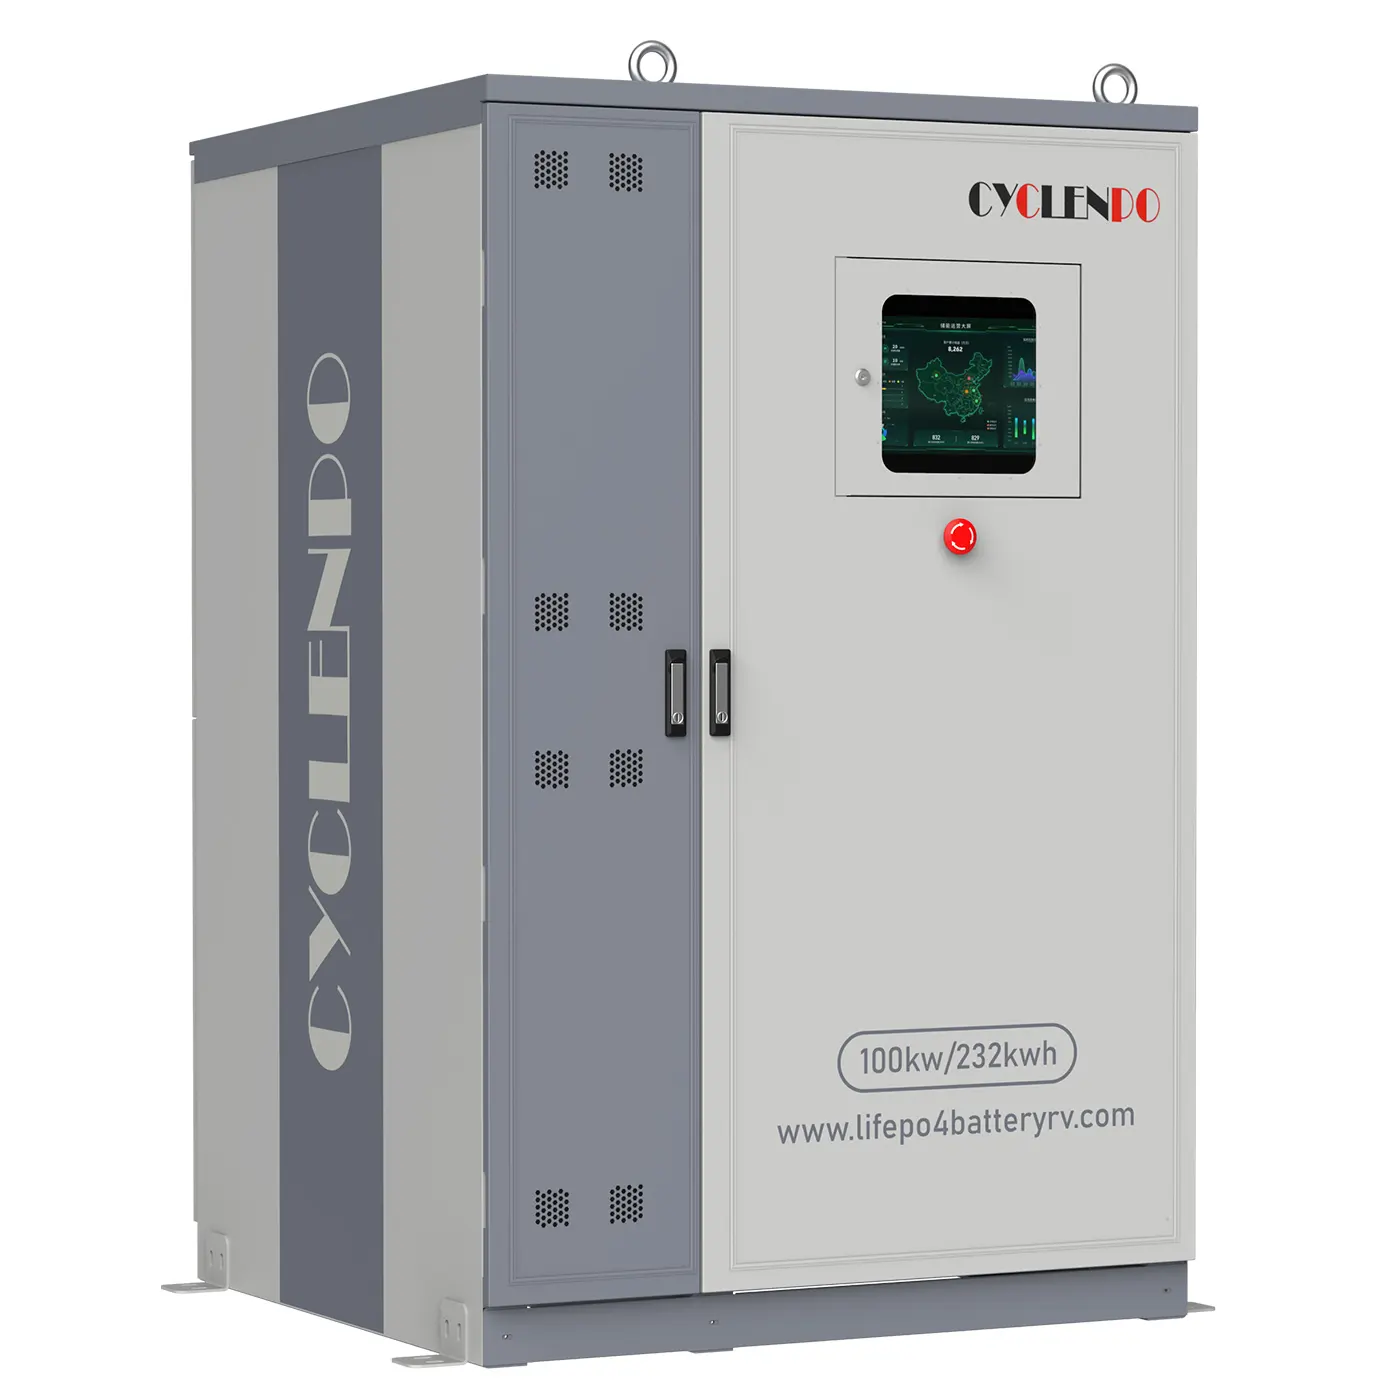 Cyclenpo 100KW 232KWH 산업 및 상업용 실외 에너지 저장 비상 전원 시스템